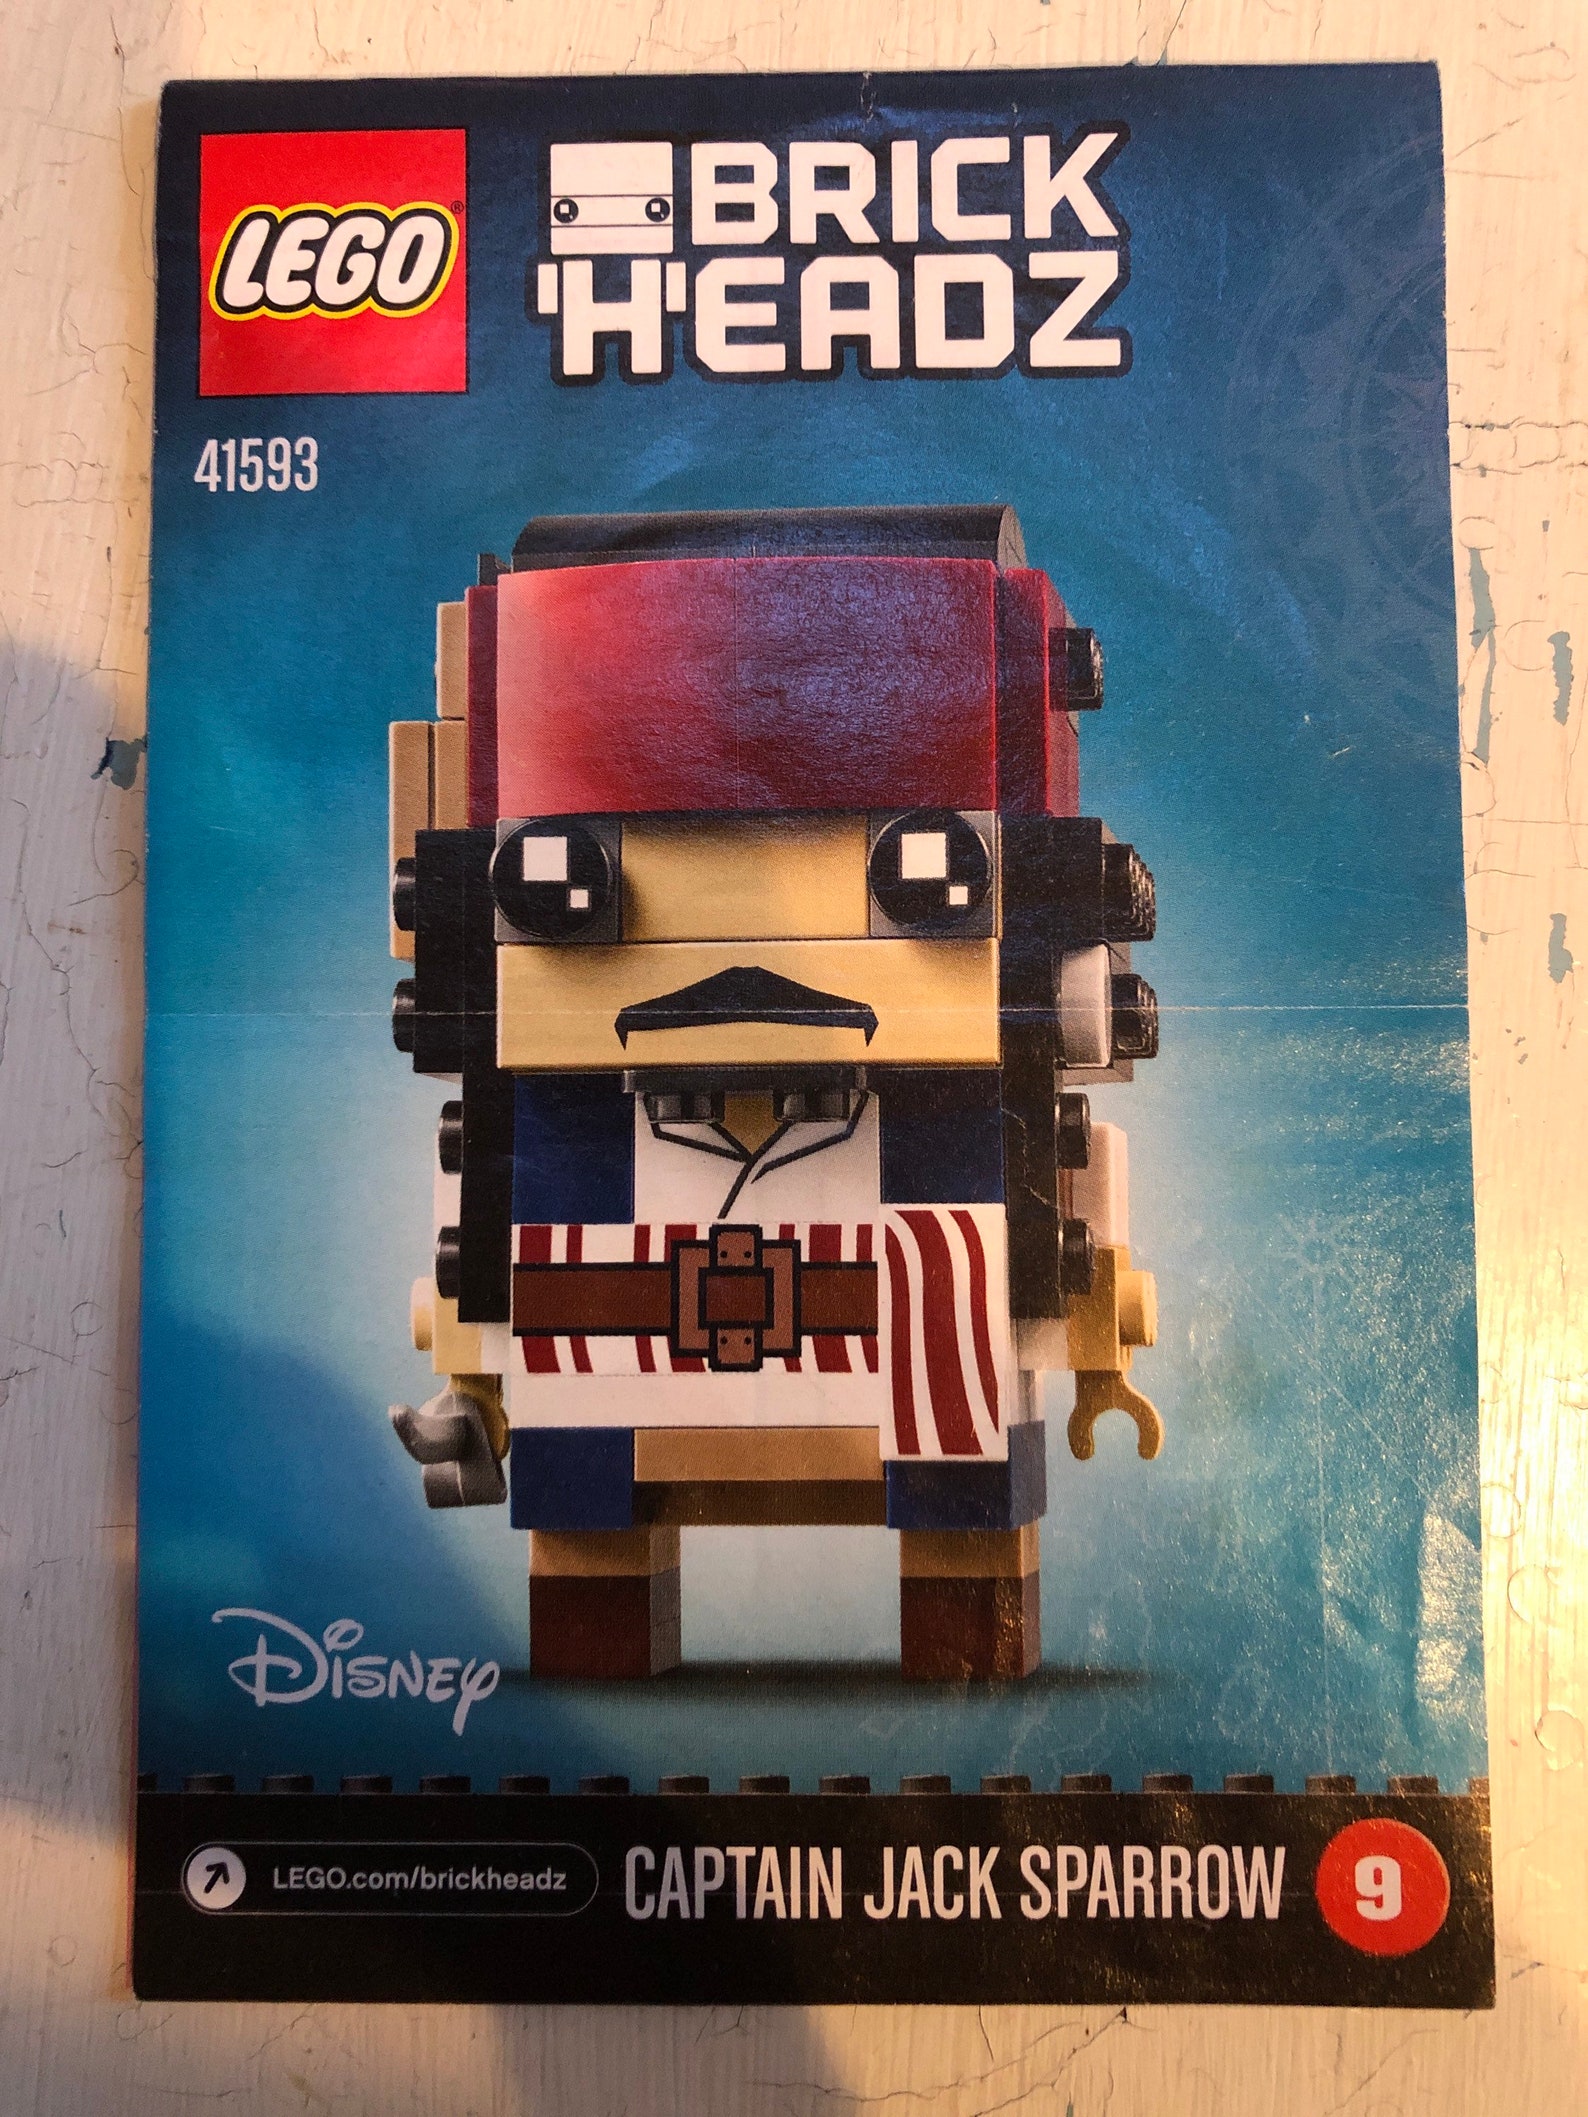 Instructieboekje: LEGO Brick Headz 41593 | Etsy